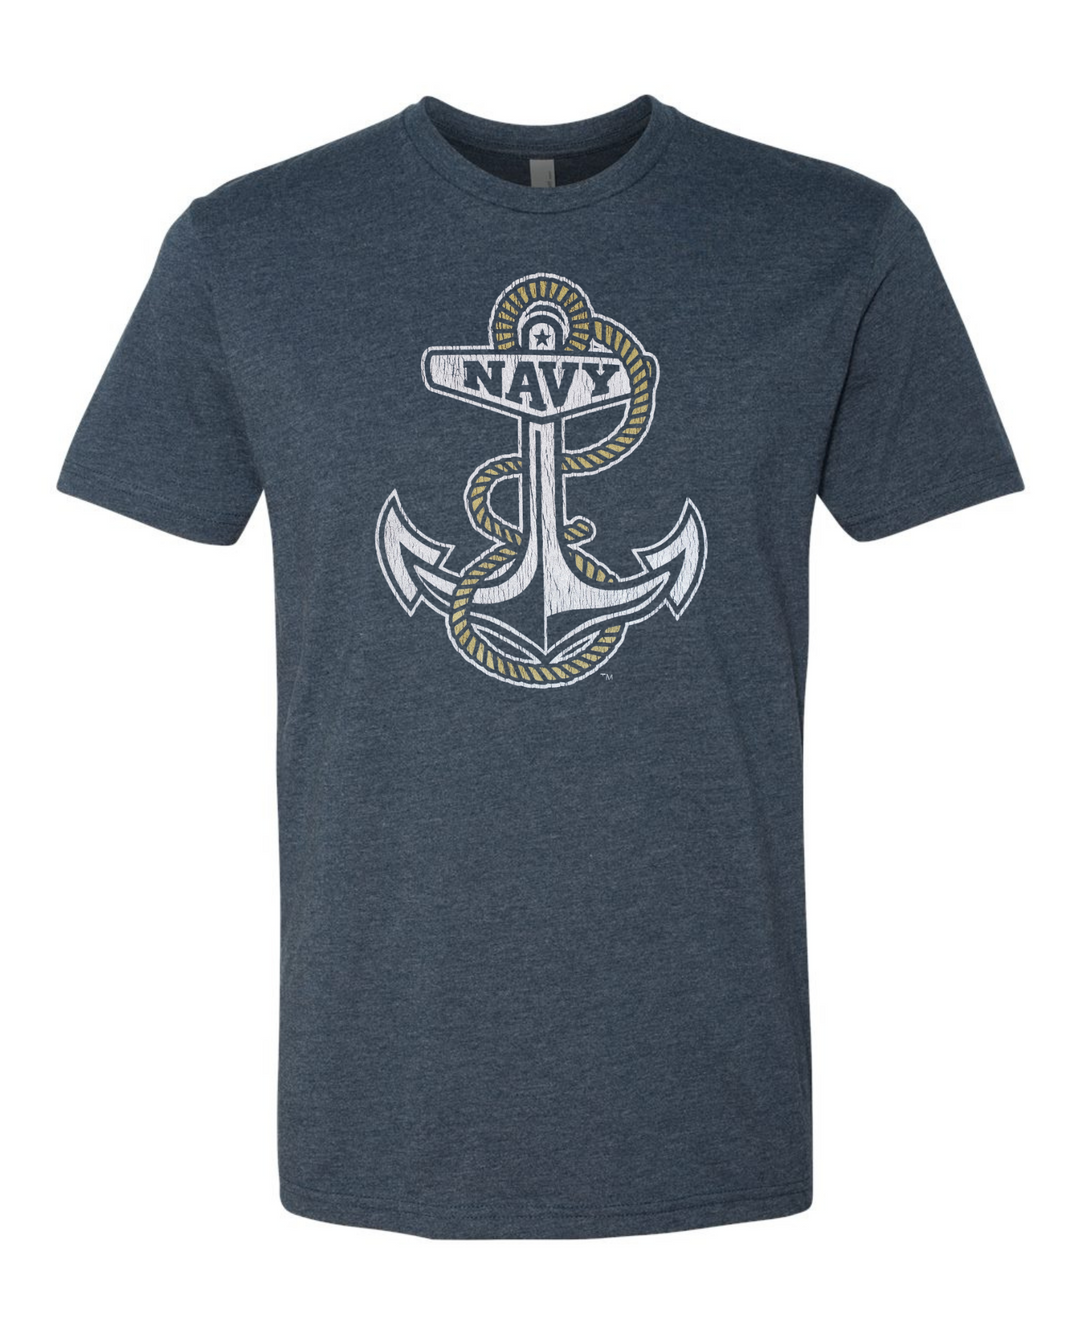 US Naval Academy Anchor Logo t-shirt - Nudge Printing Mock Up